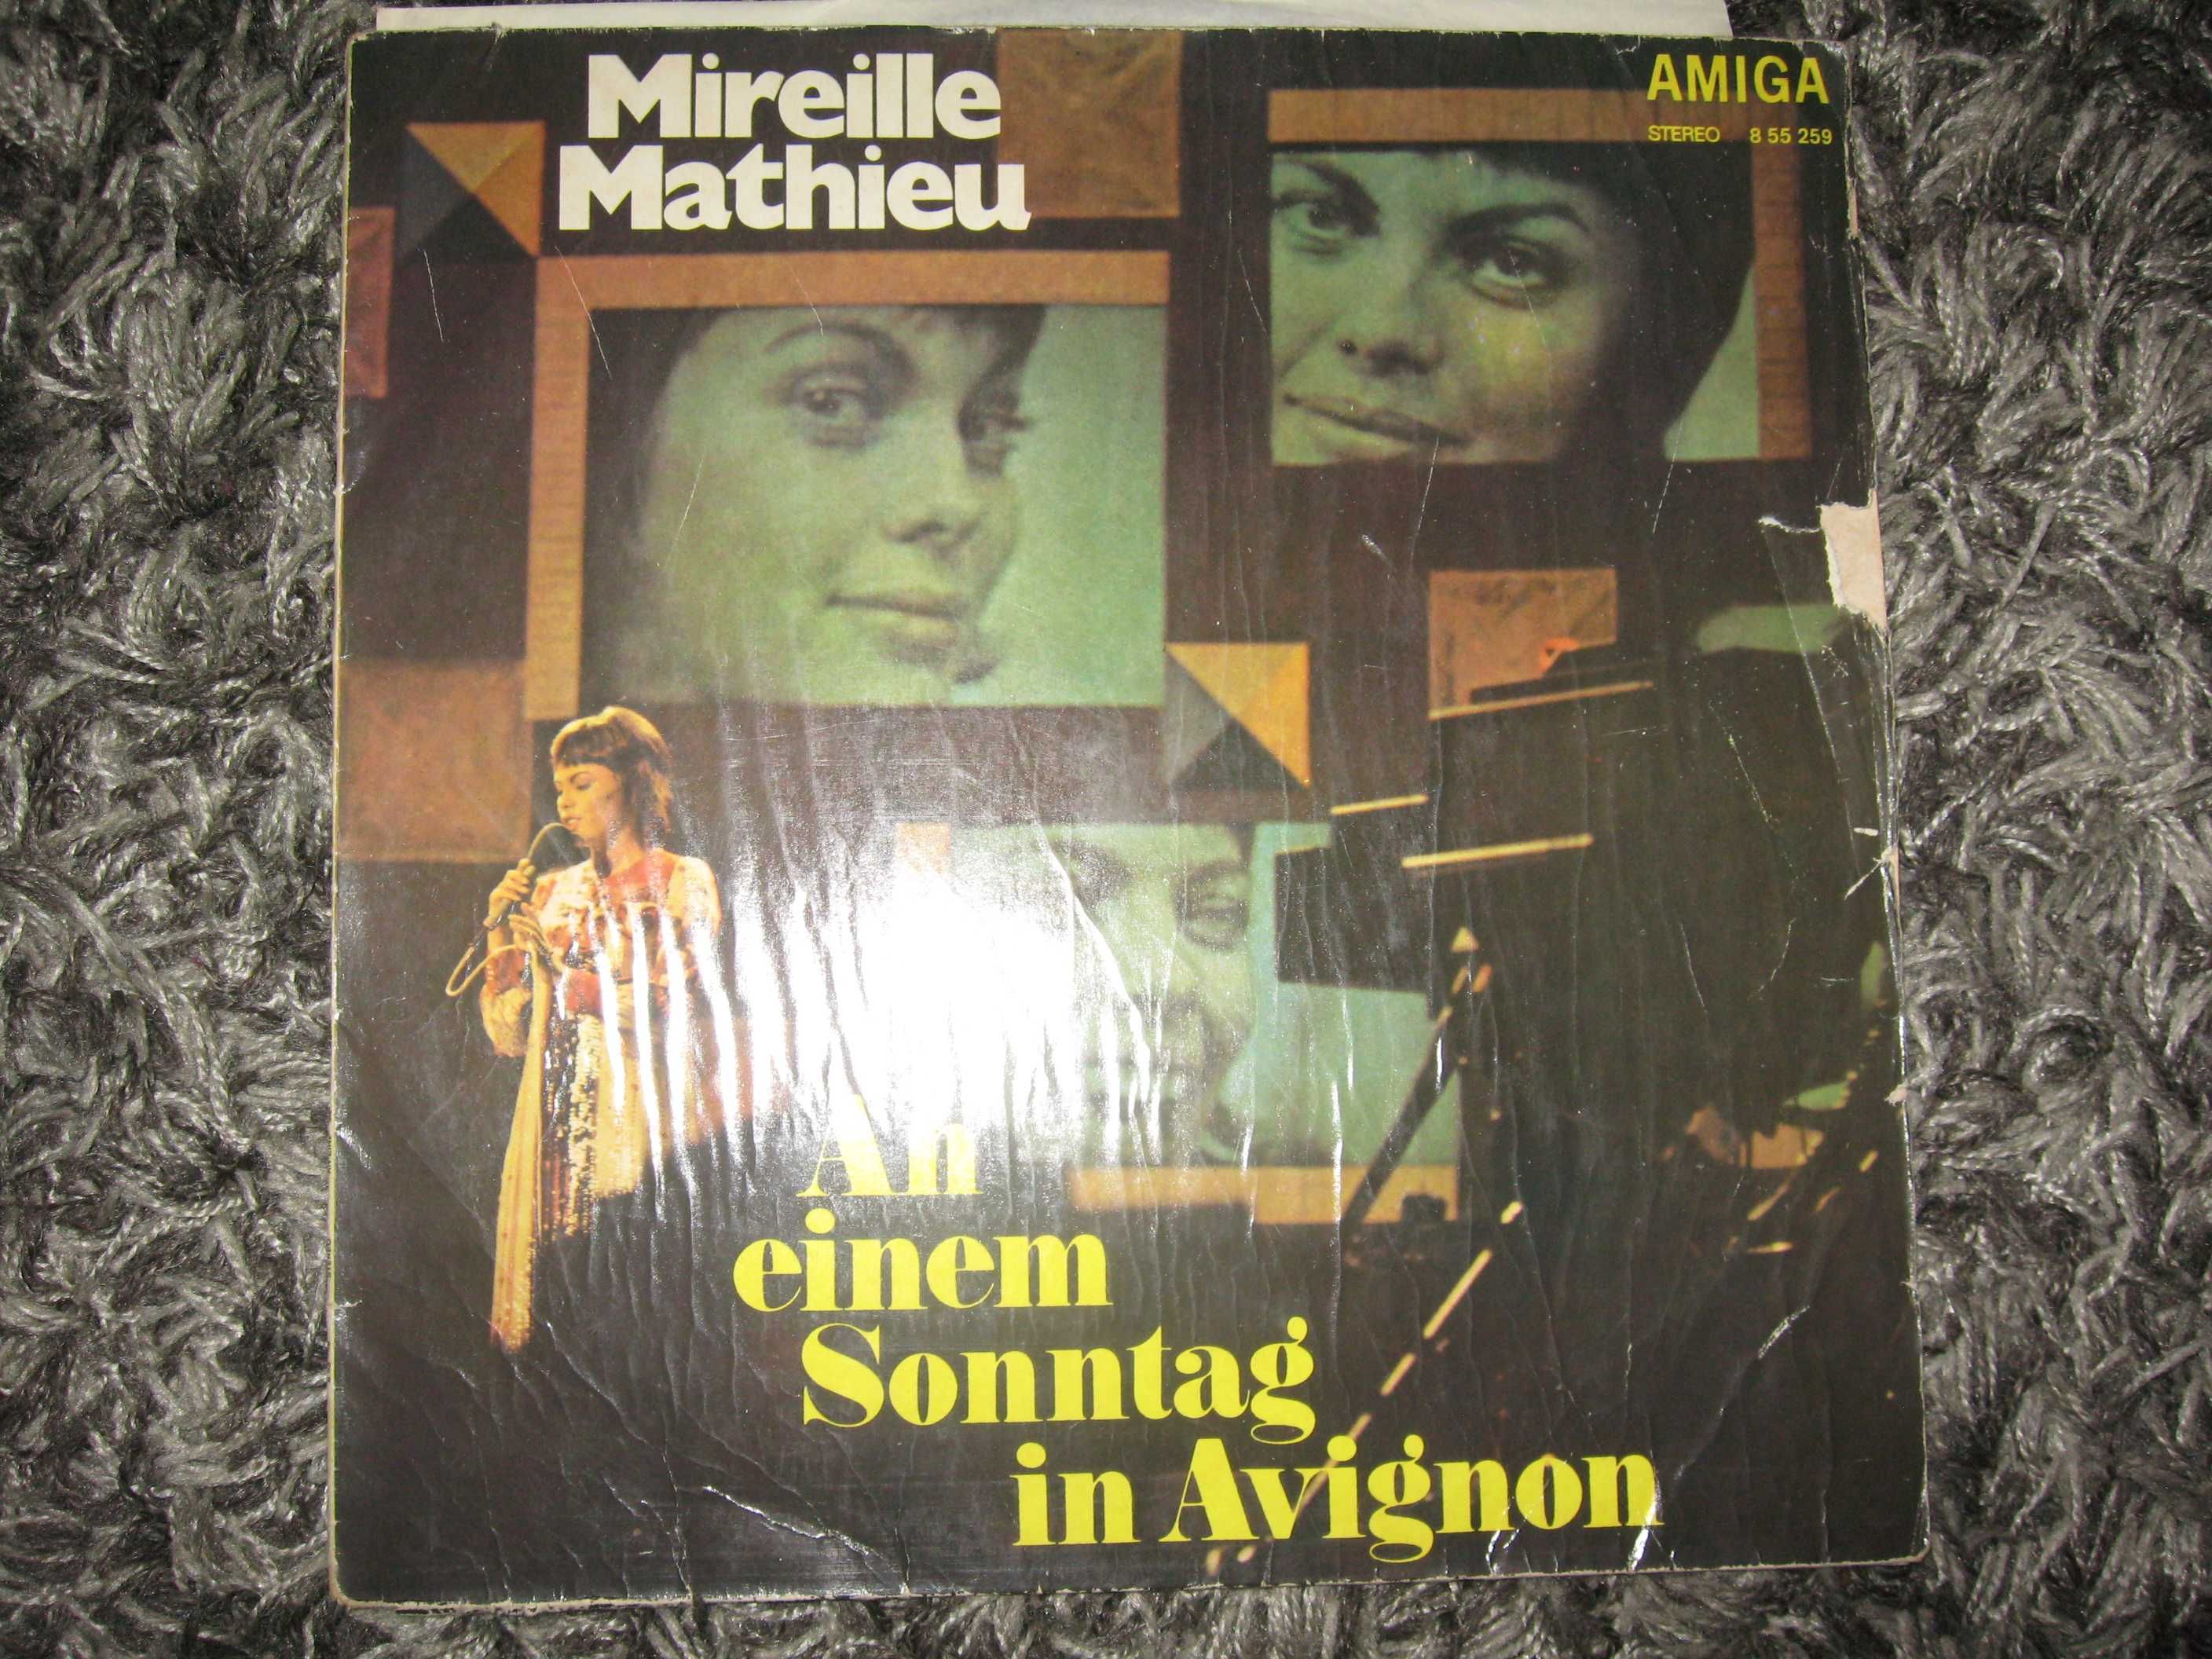 Płyta winylowa - Mireille Mathieu  "An  einen Sonntag in Awignon"